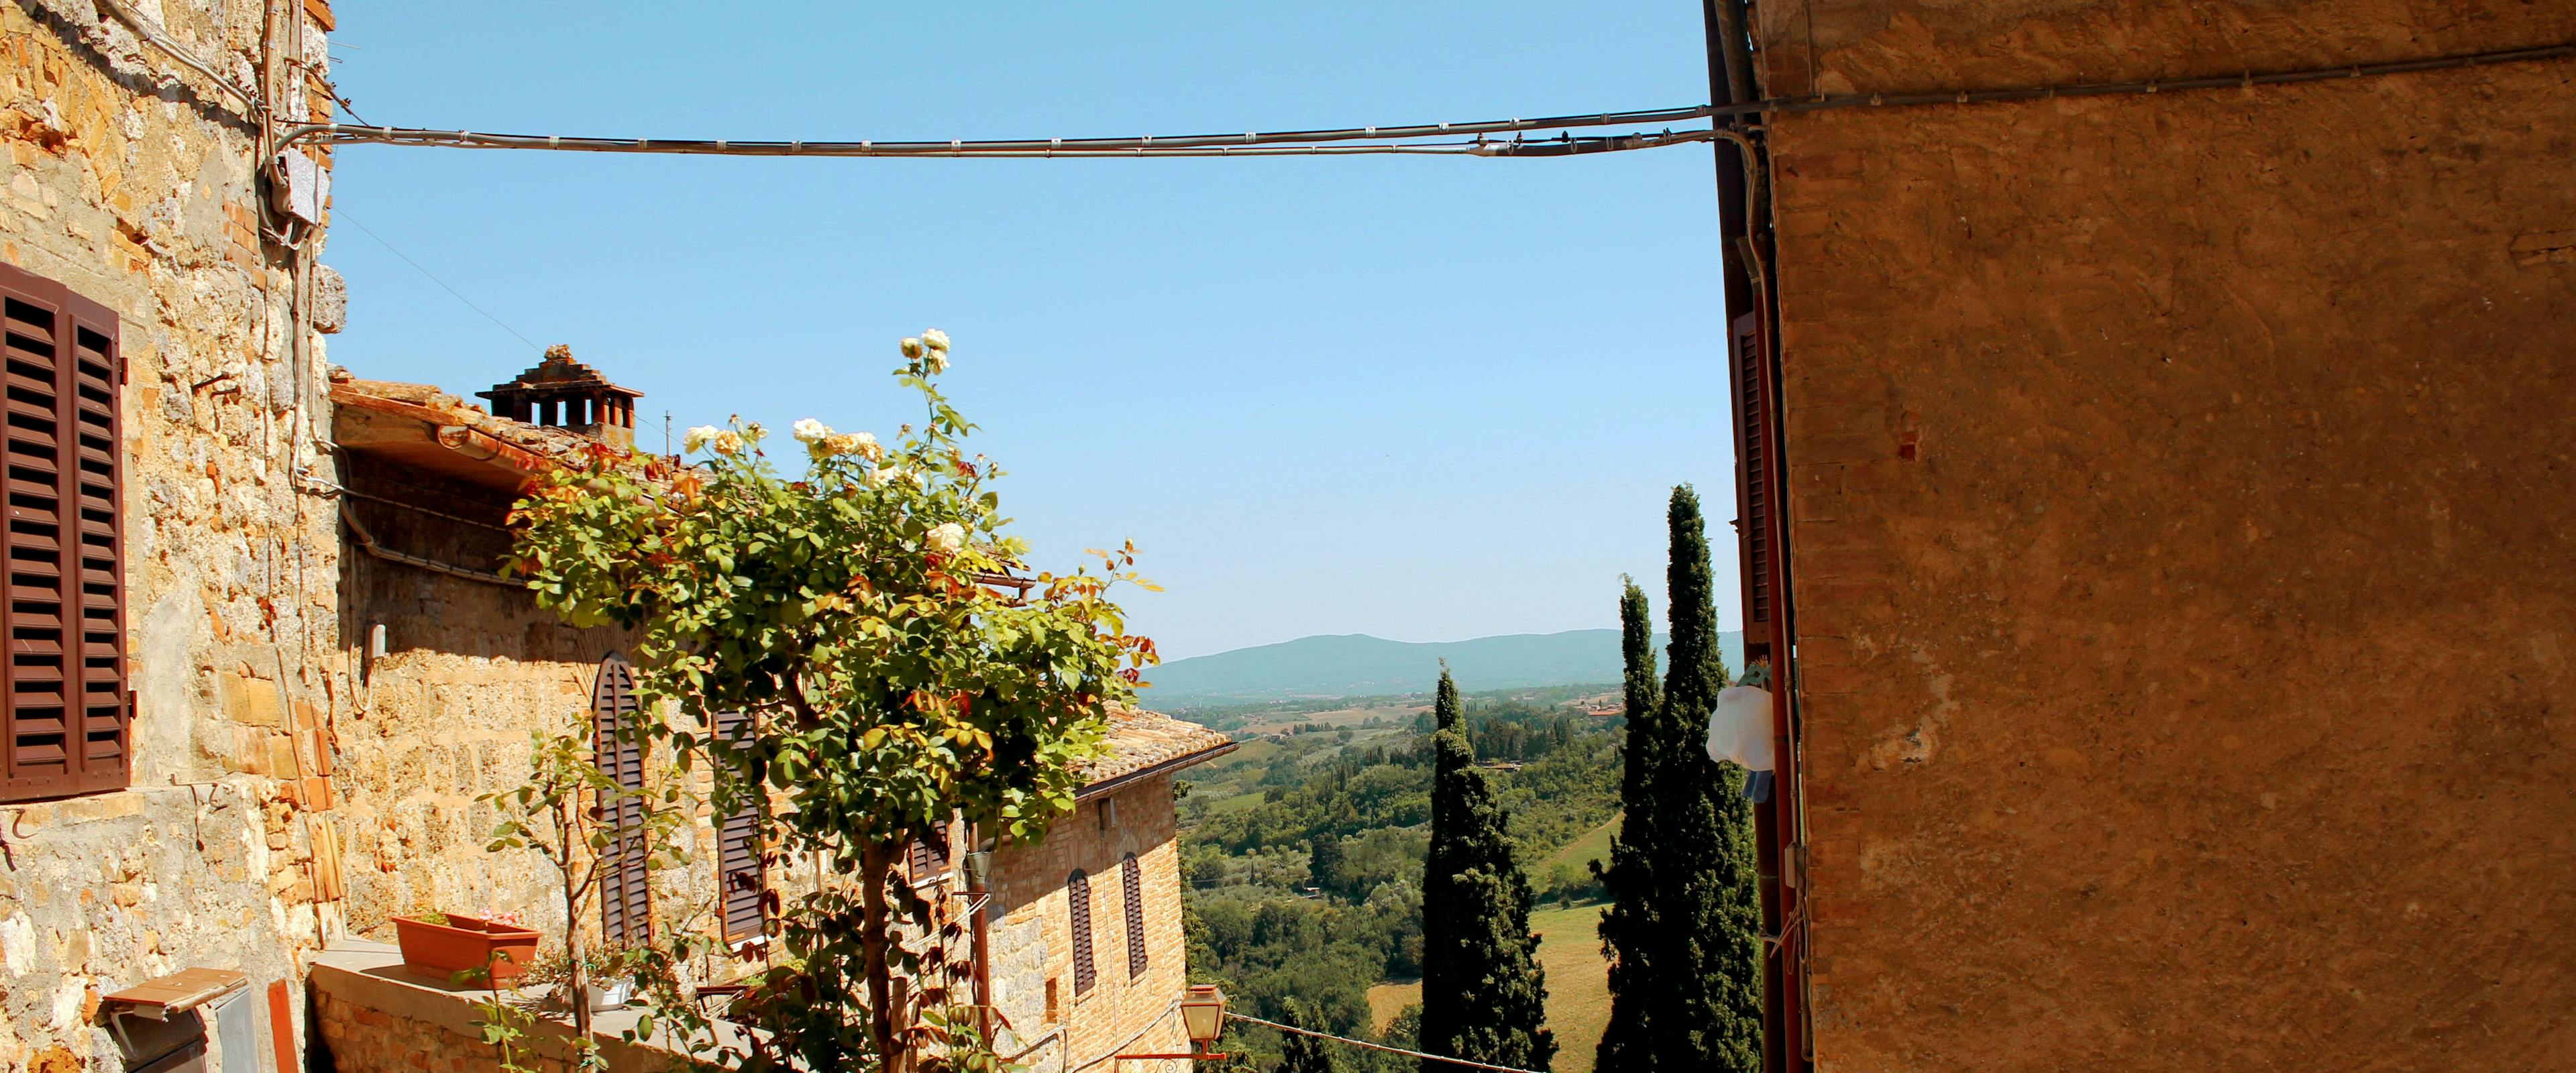 View of an Italian Village